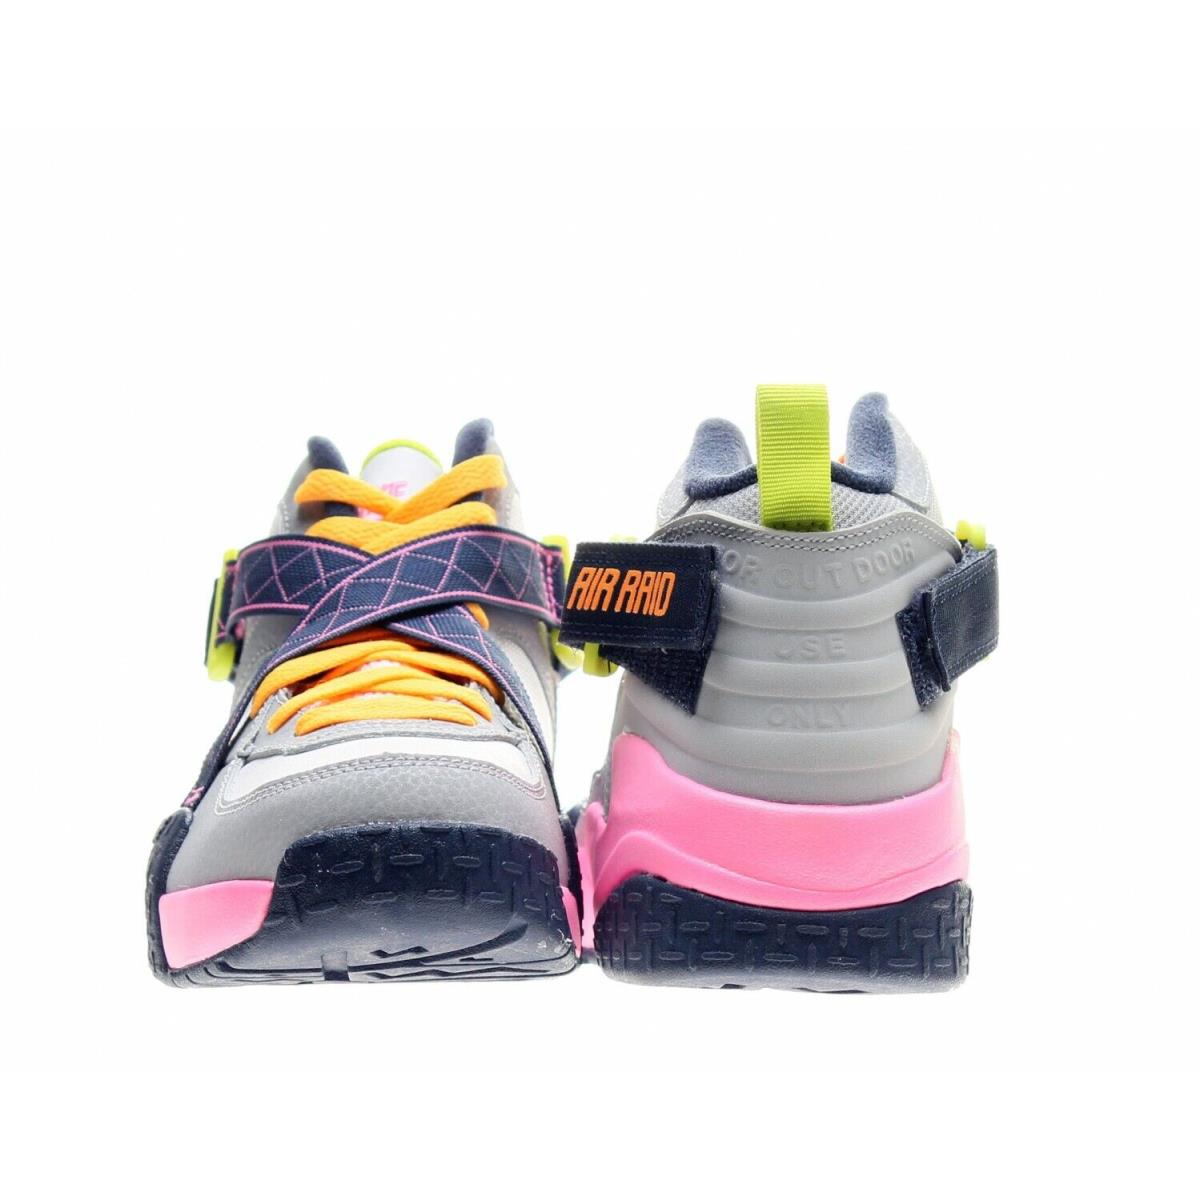 Nike shoes Air Raid - White/Pink, Grey, MDNGHT Navy 2